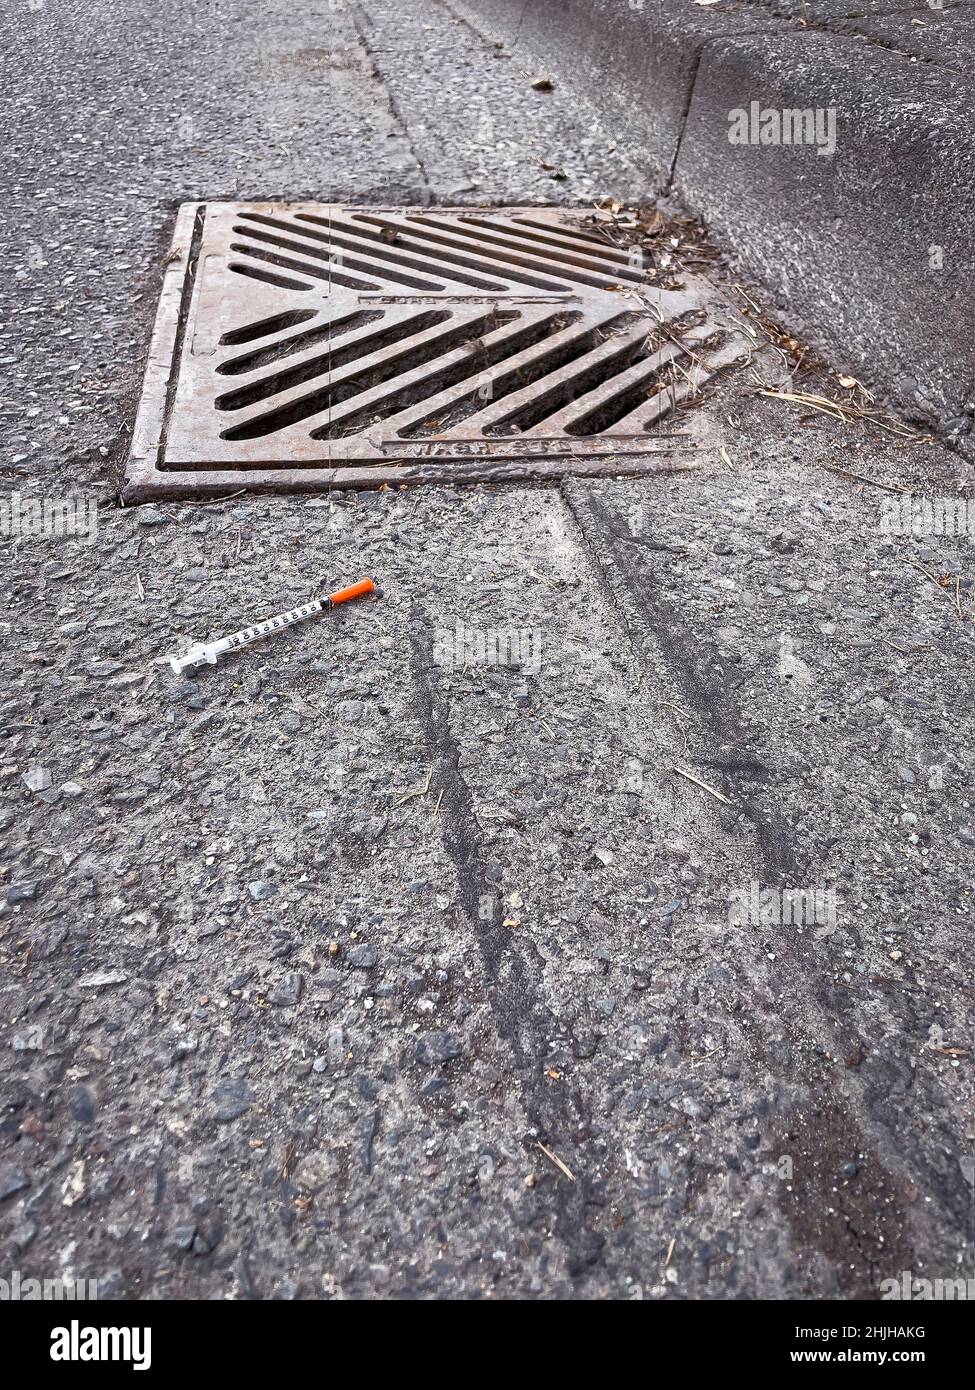 Syringe beside storm drain. Stock Photo